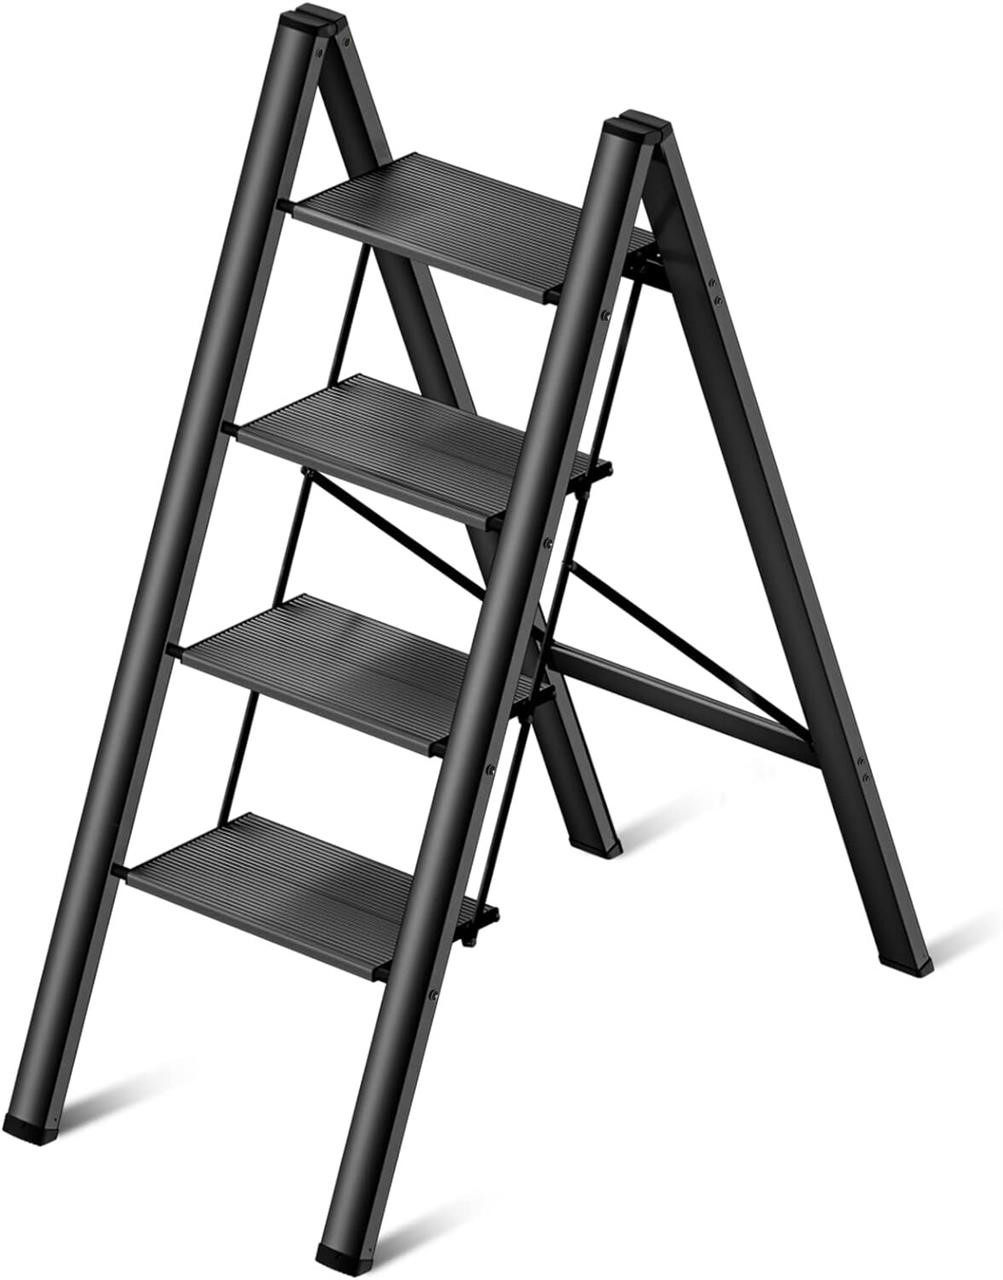 4 Step Ladder Folding Step Stool Aluminum